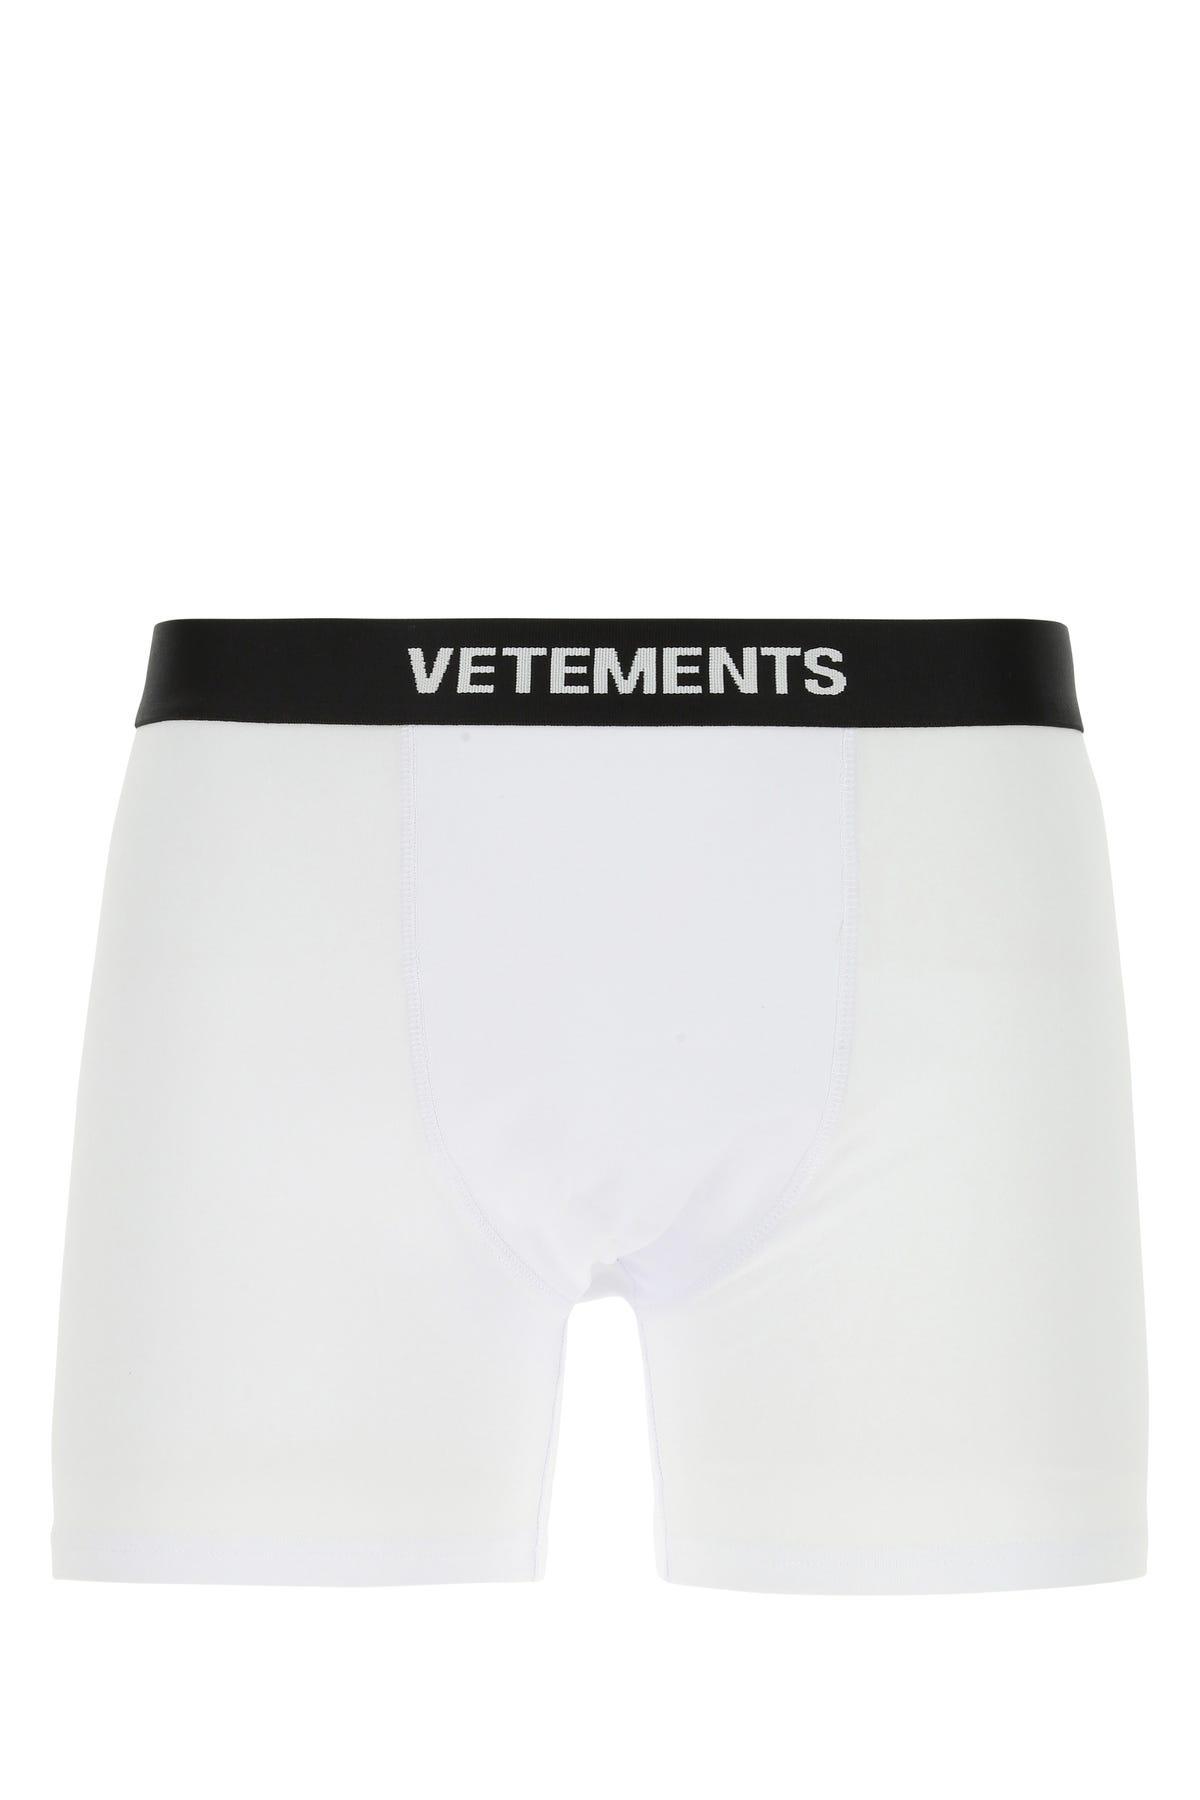 Vetements White Stretch Cotton Boxer in Black for Men